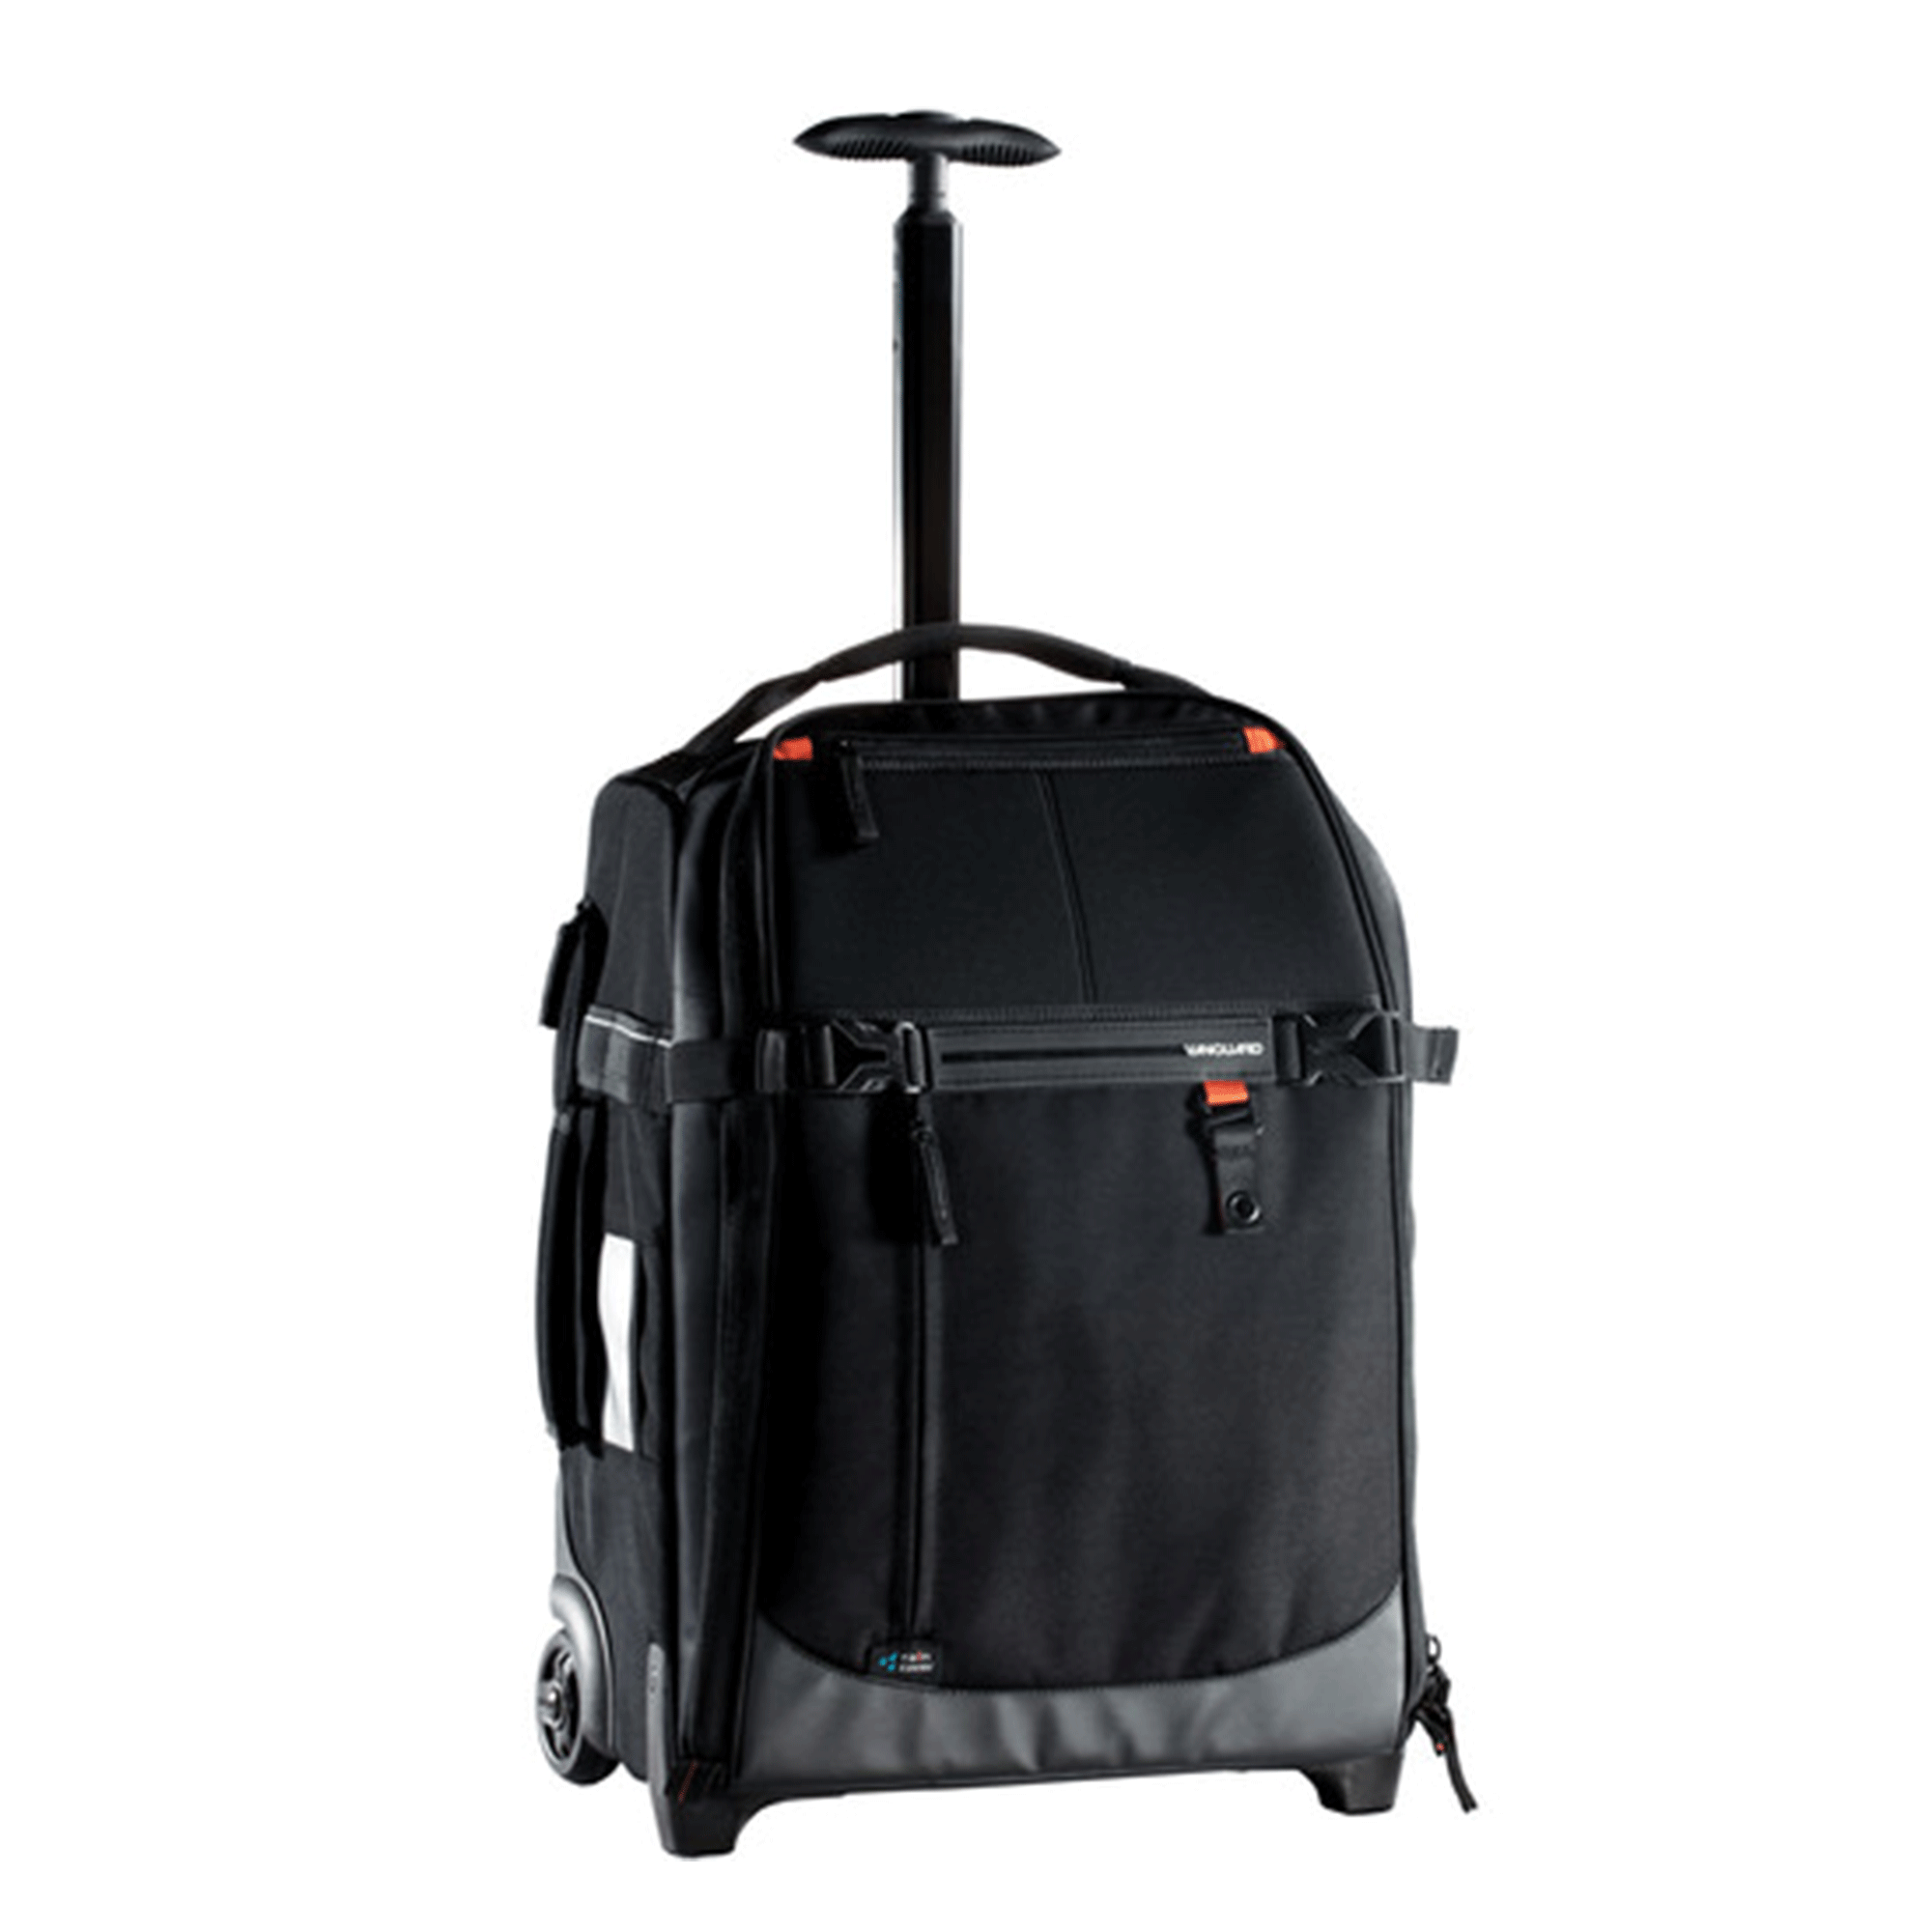 Vanguard Quovio 49T Roller/Trolley Bag